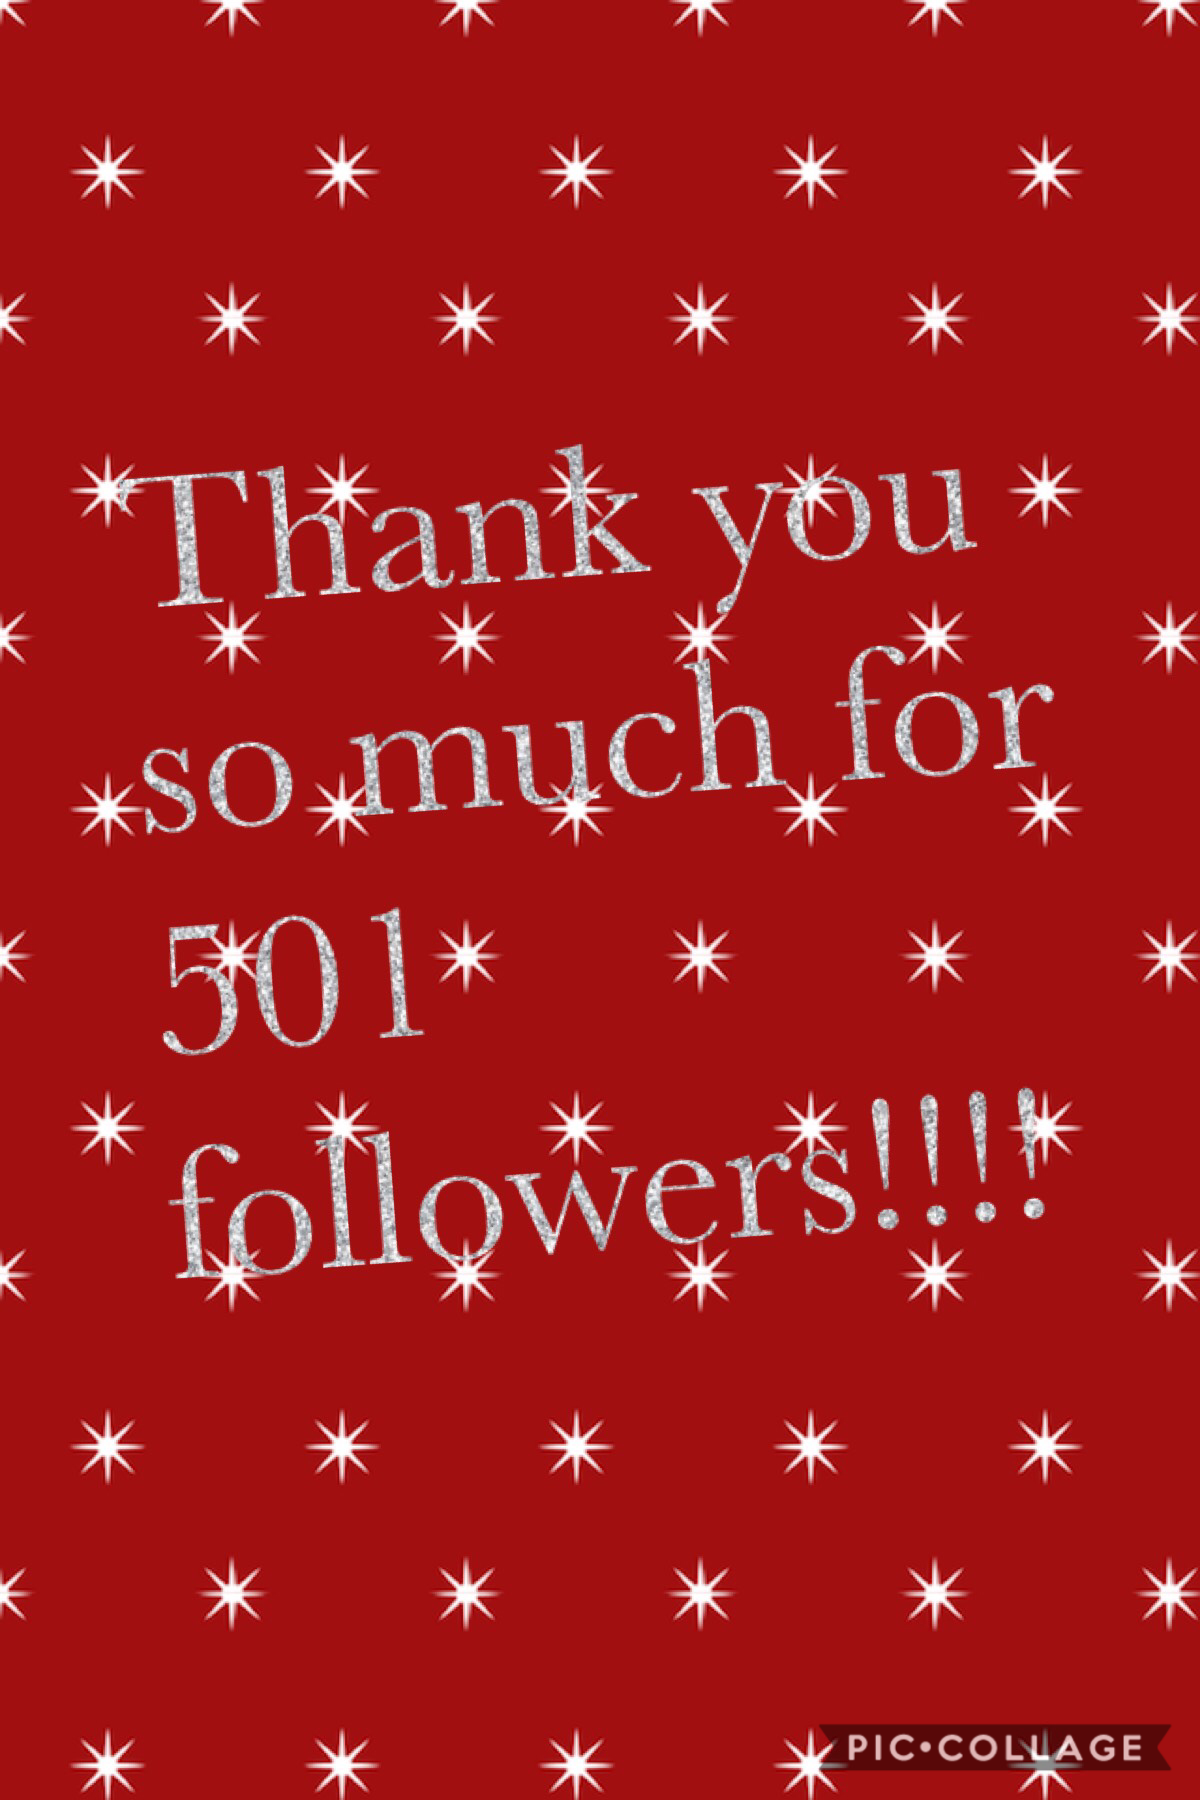 Thank you!!!!! Love u guys!!😀😀😀😀😀❤️❤️❤️ Again TYSM!!!!💜💜💜💜💜